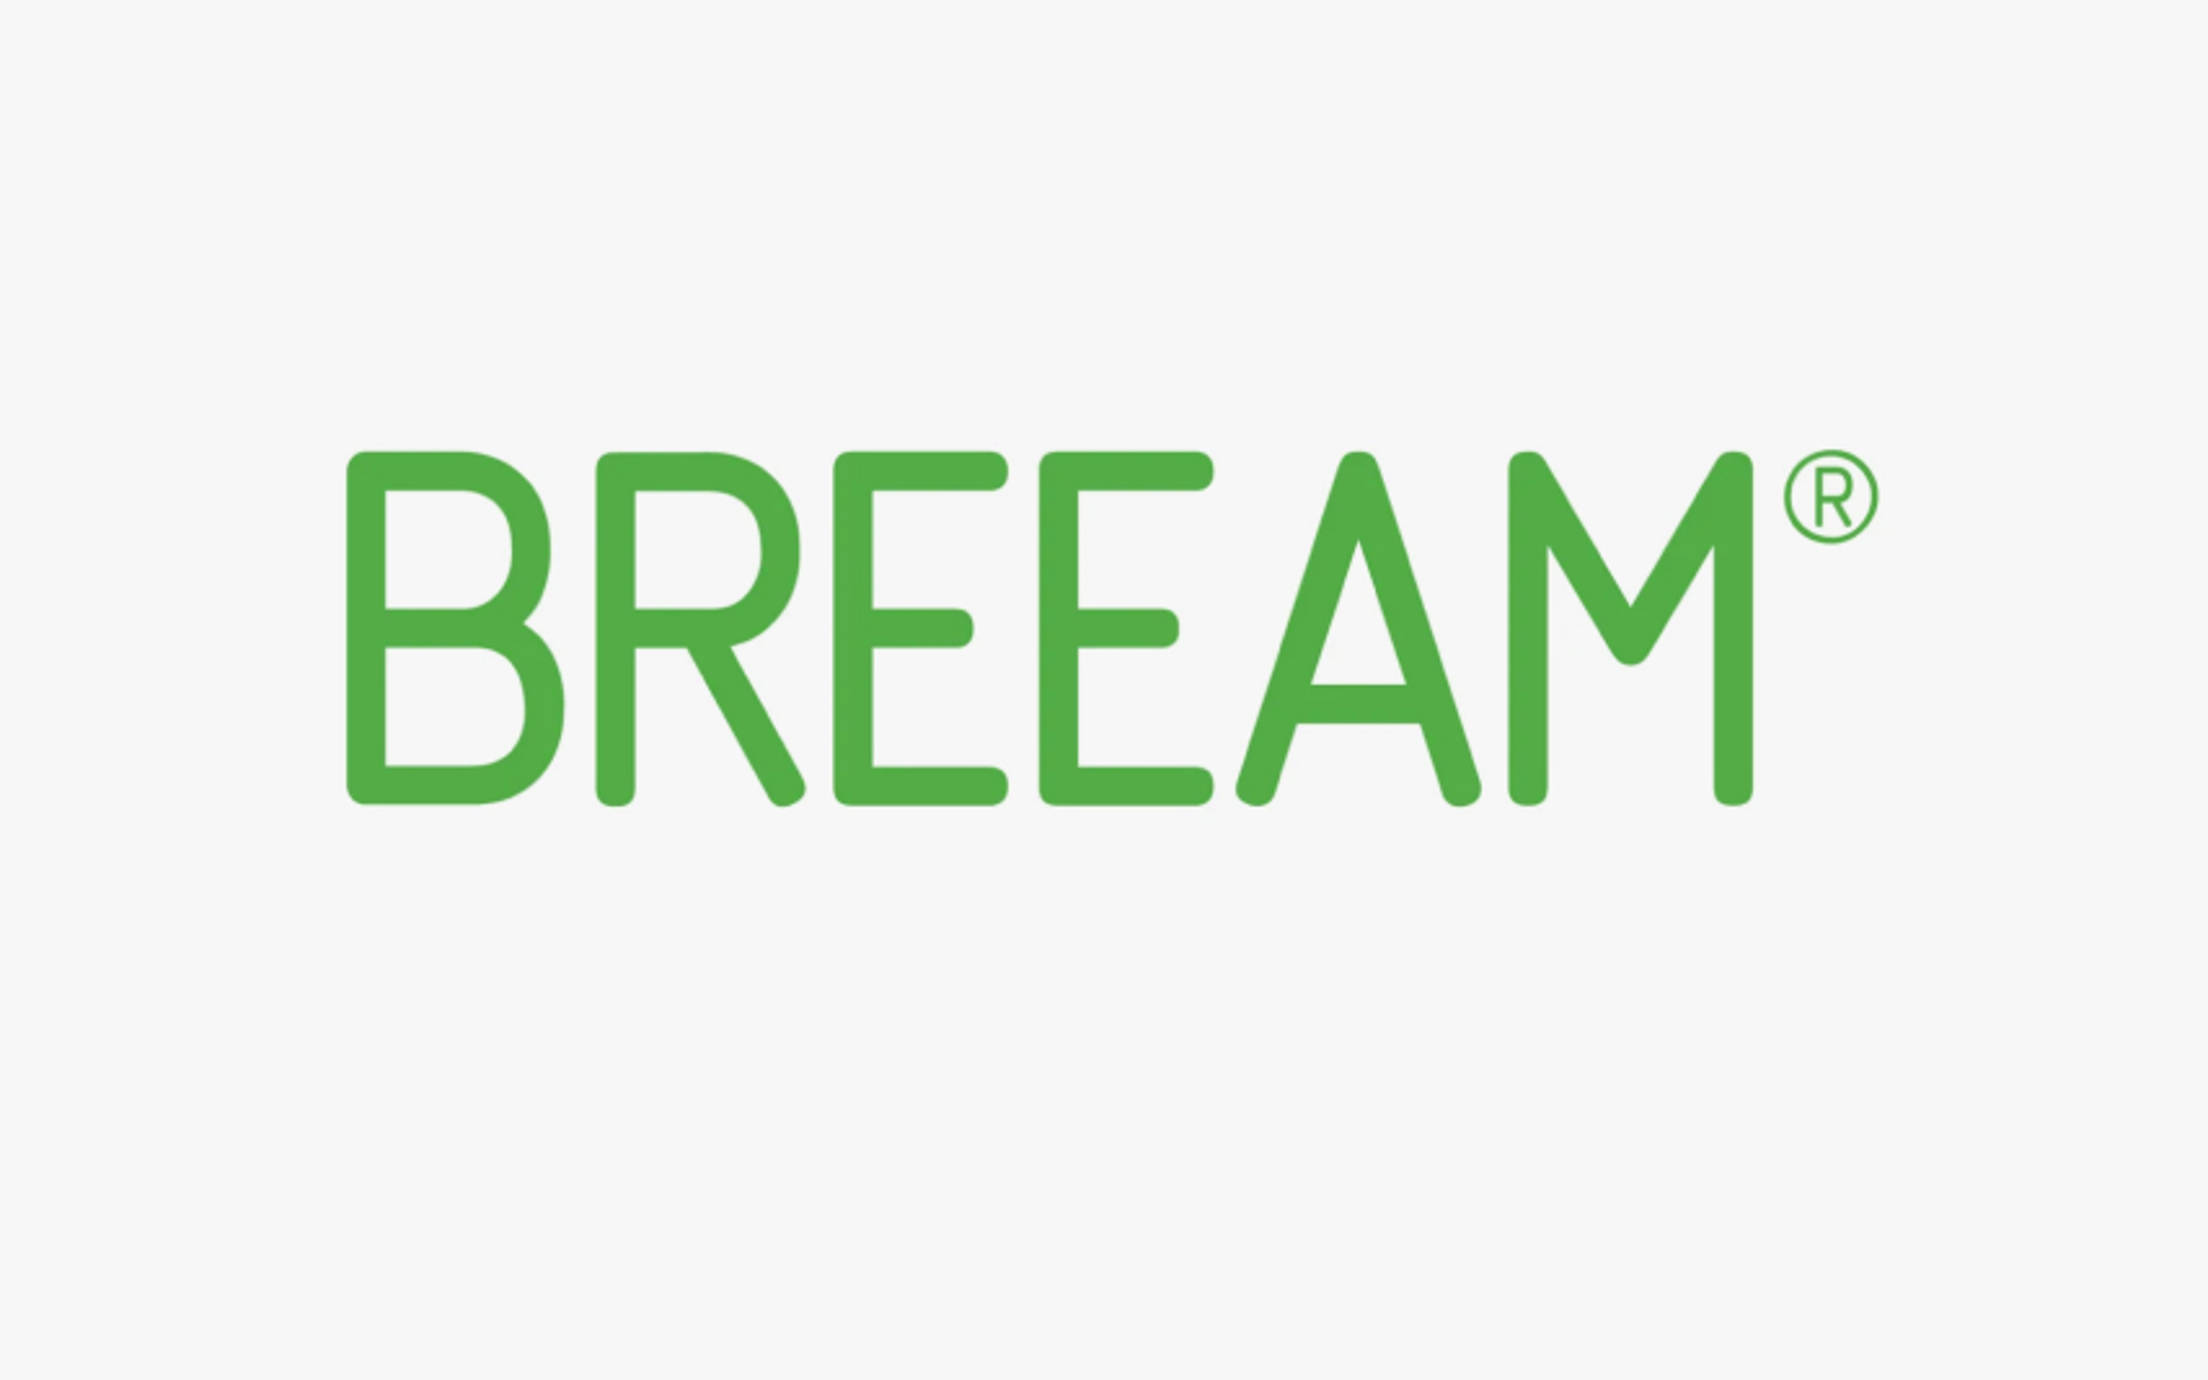 BREEAM logo on gray background